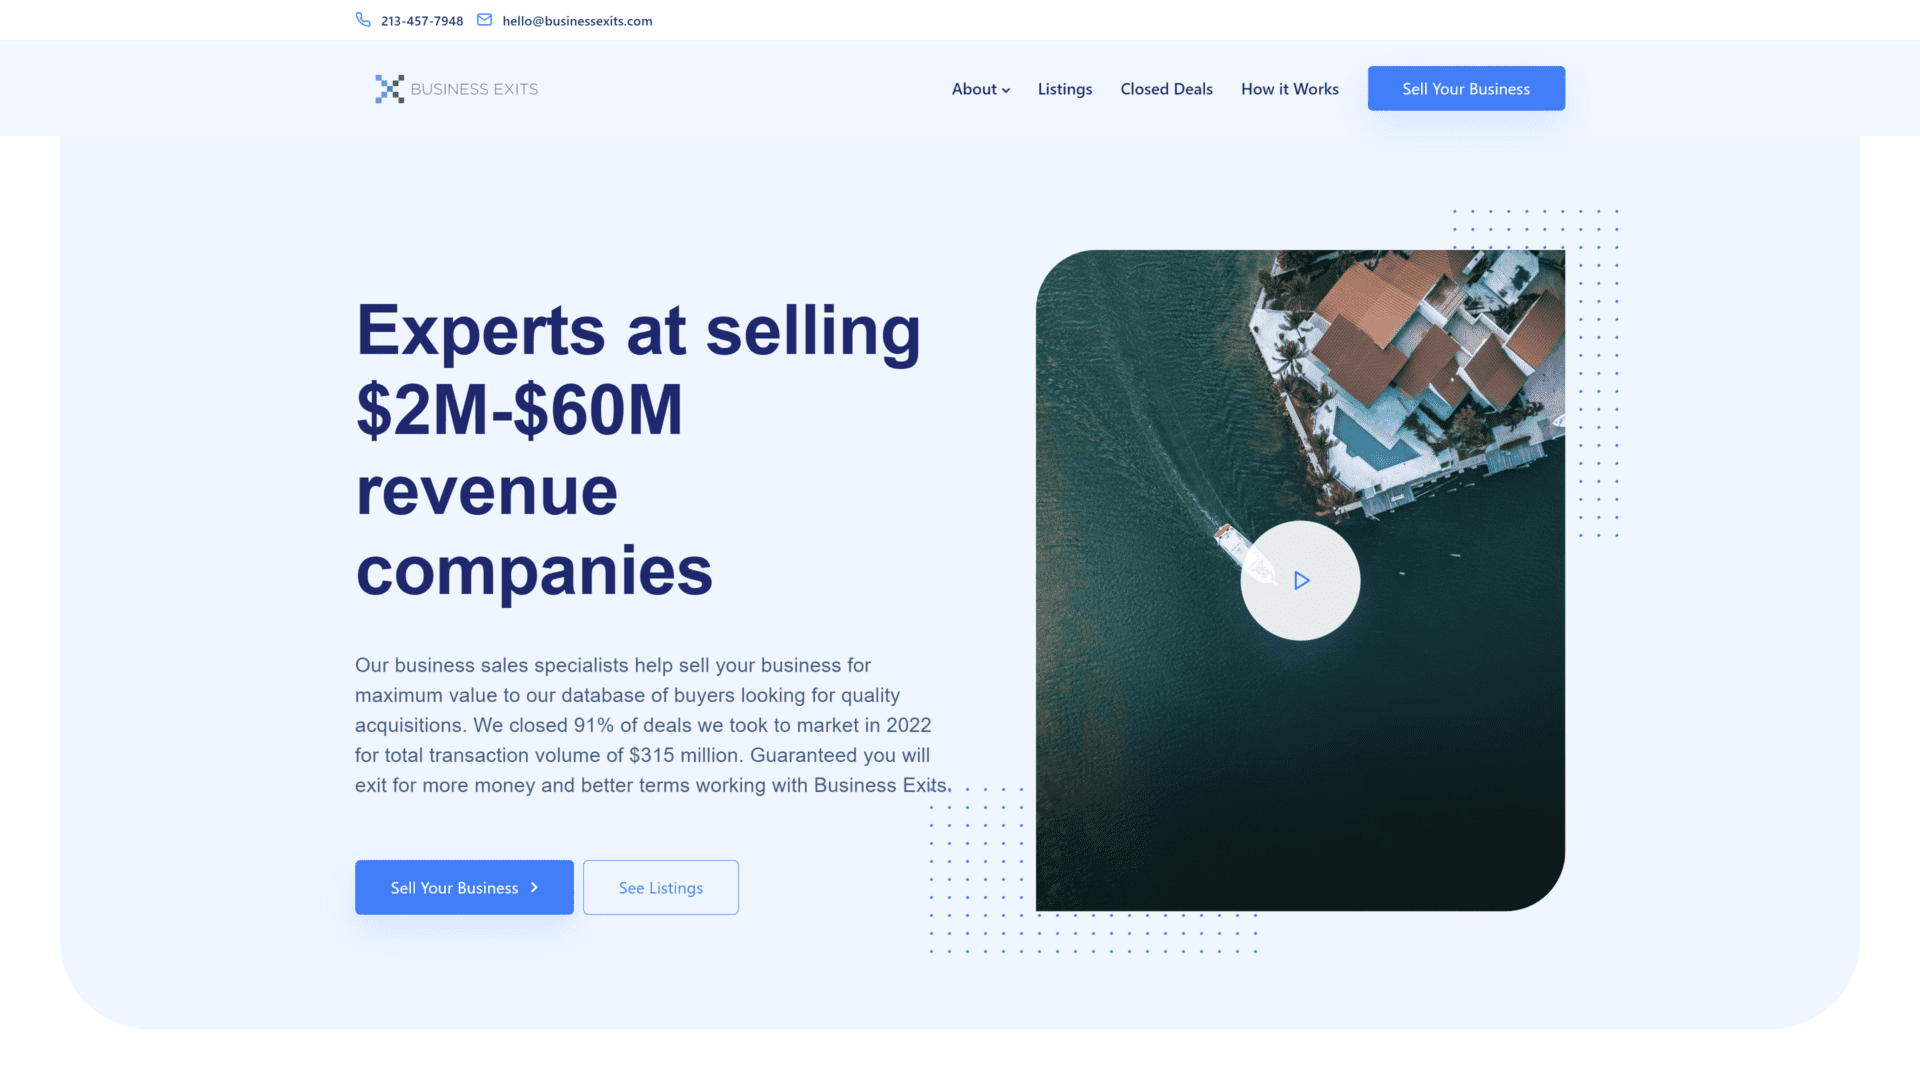 businessexits homepage screenshot 1